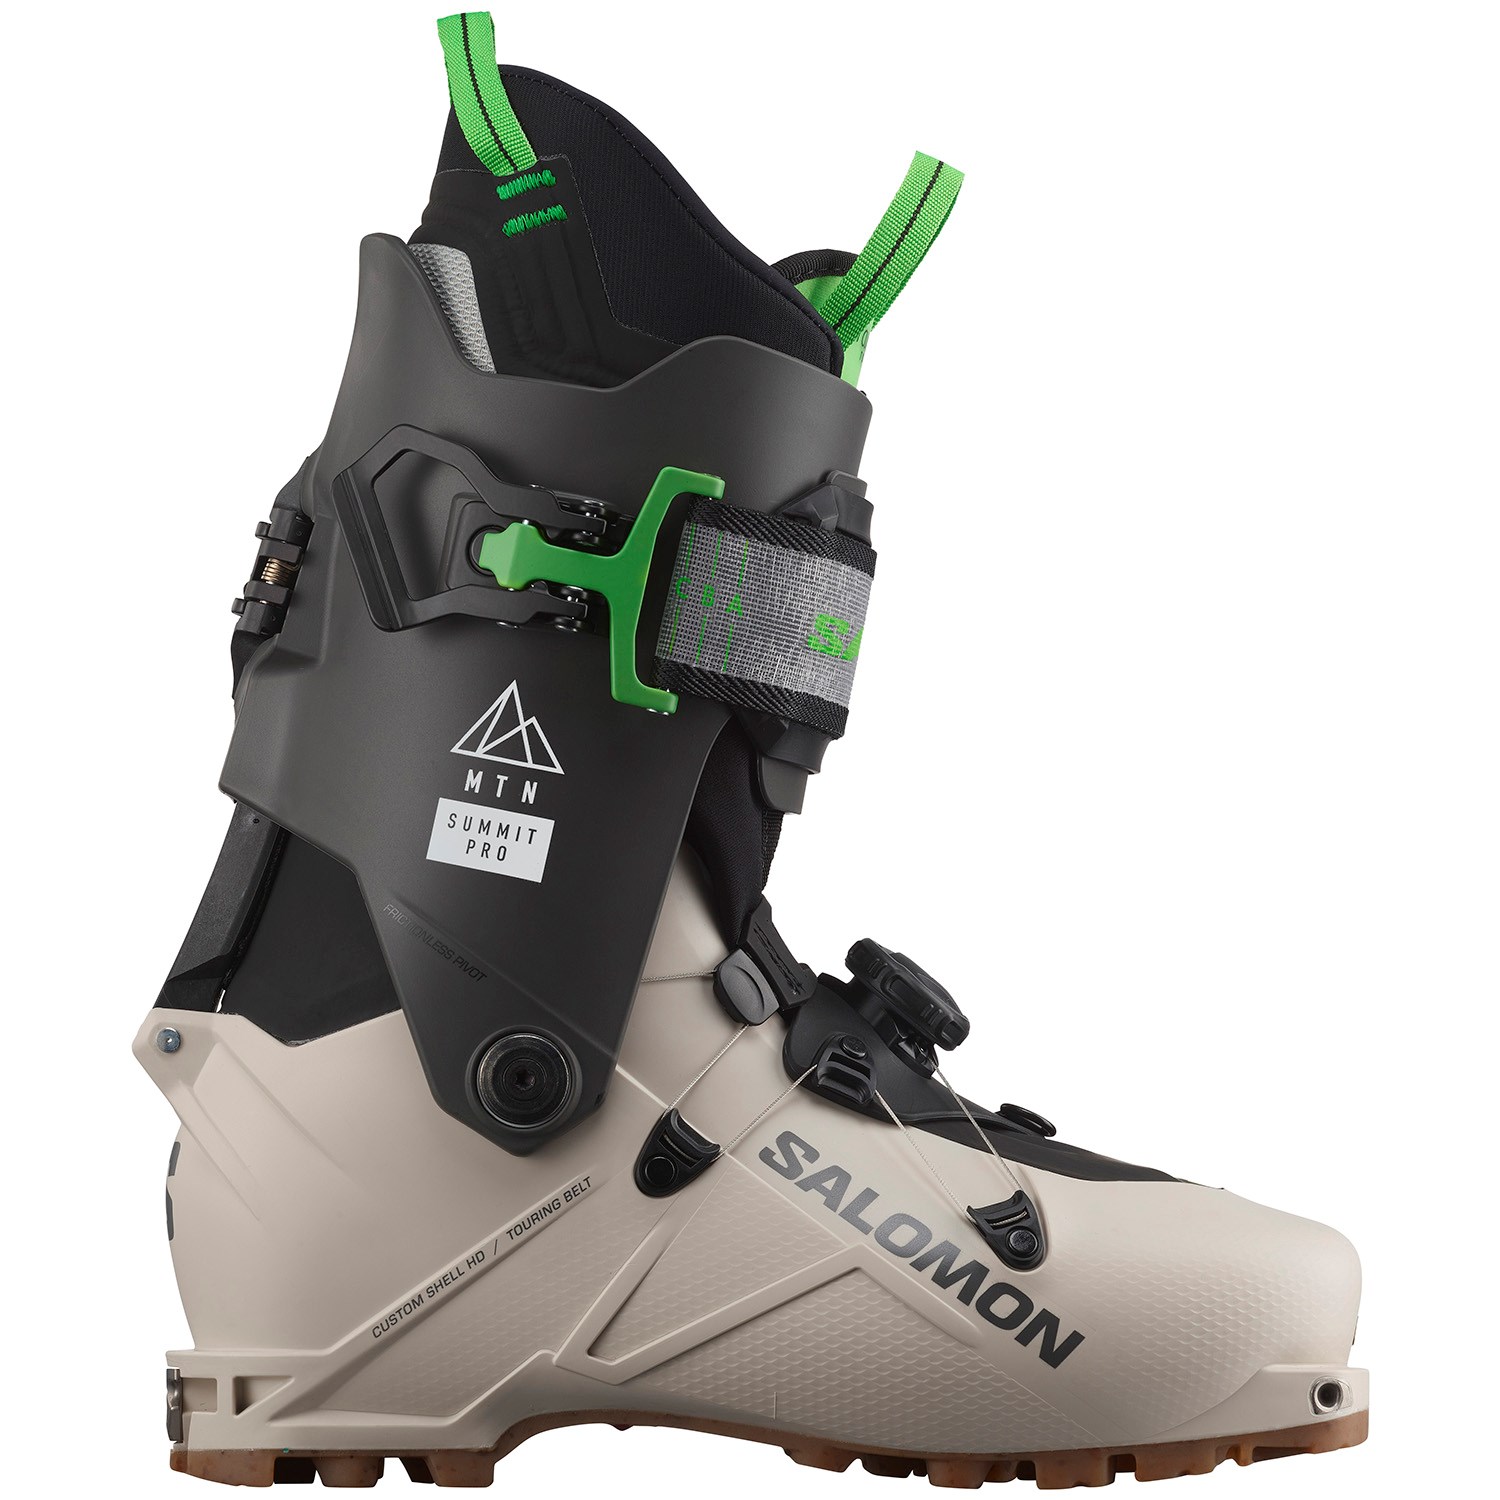 Ботинки Salomon MTN Summit Pro Alpine Touring лыжные, чёрный ботинки женские salomon mtn summit pro лыжные rainy day